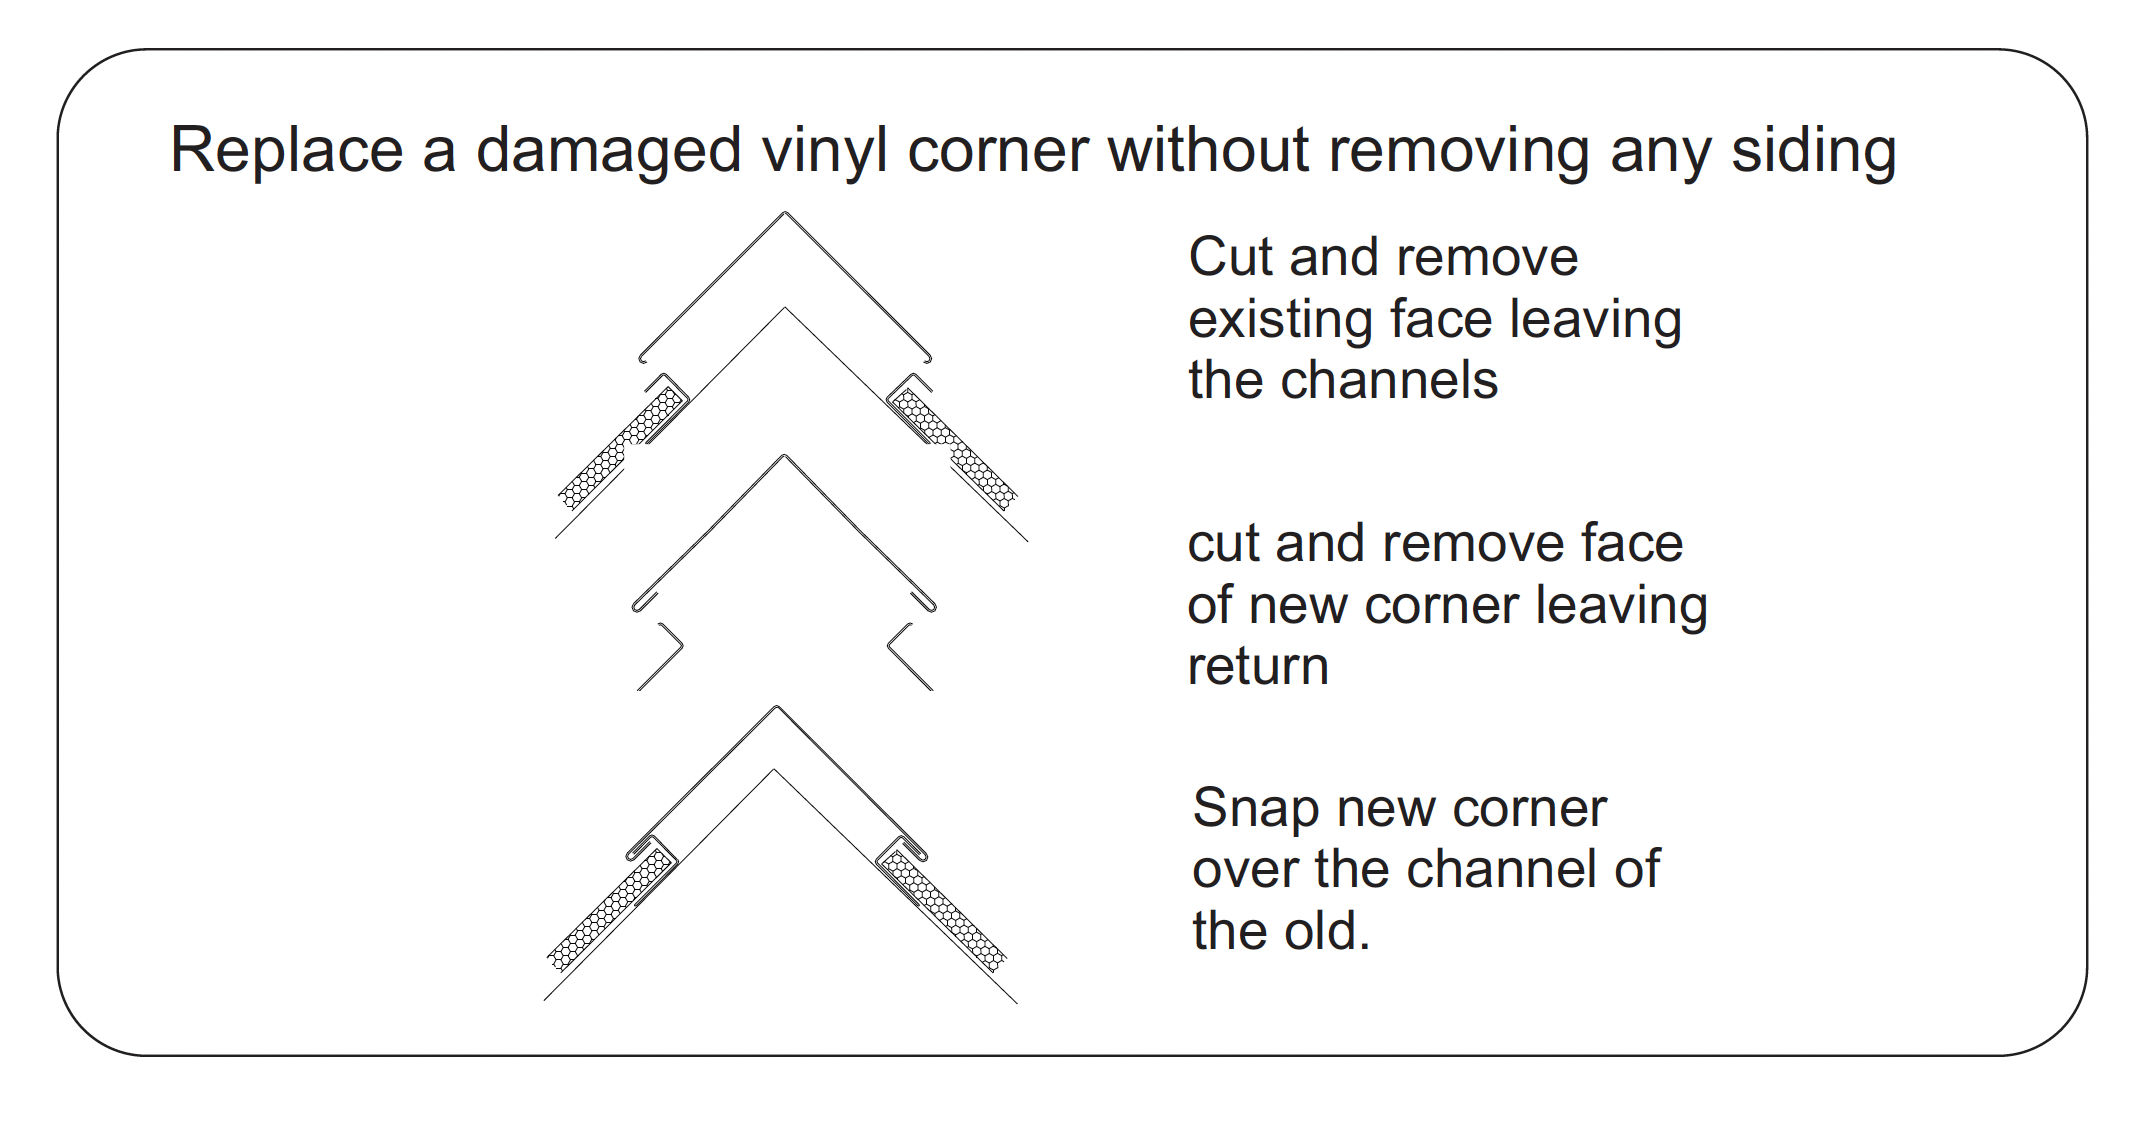 Vinyl corner replacement guide graphic